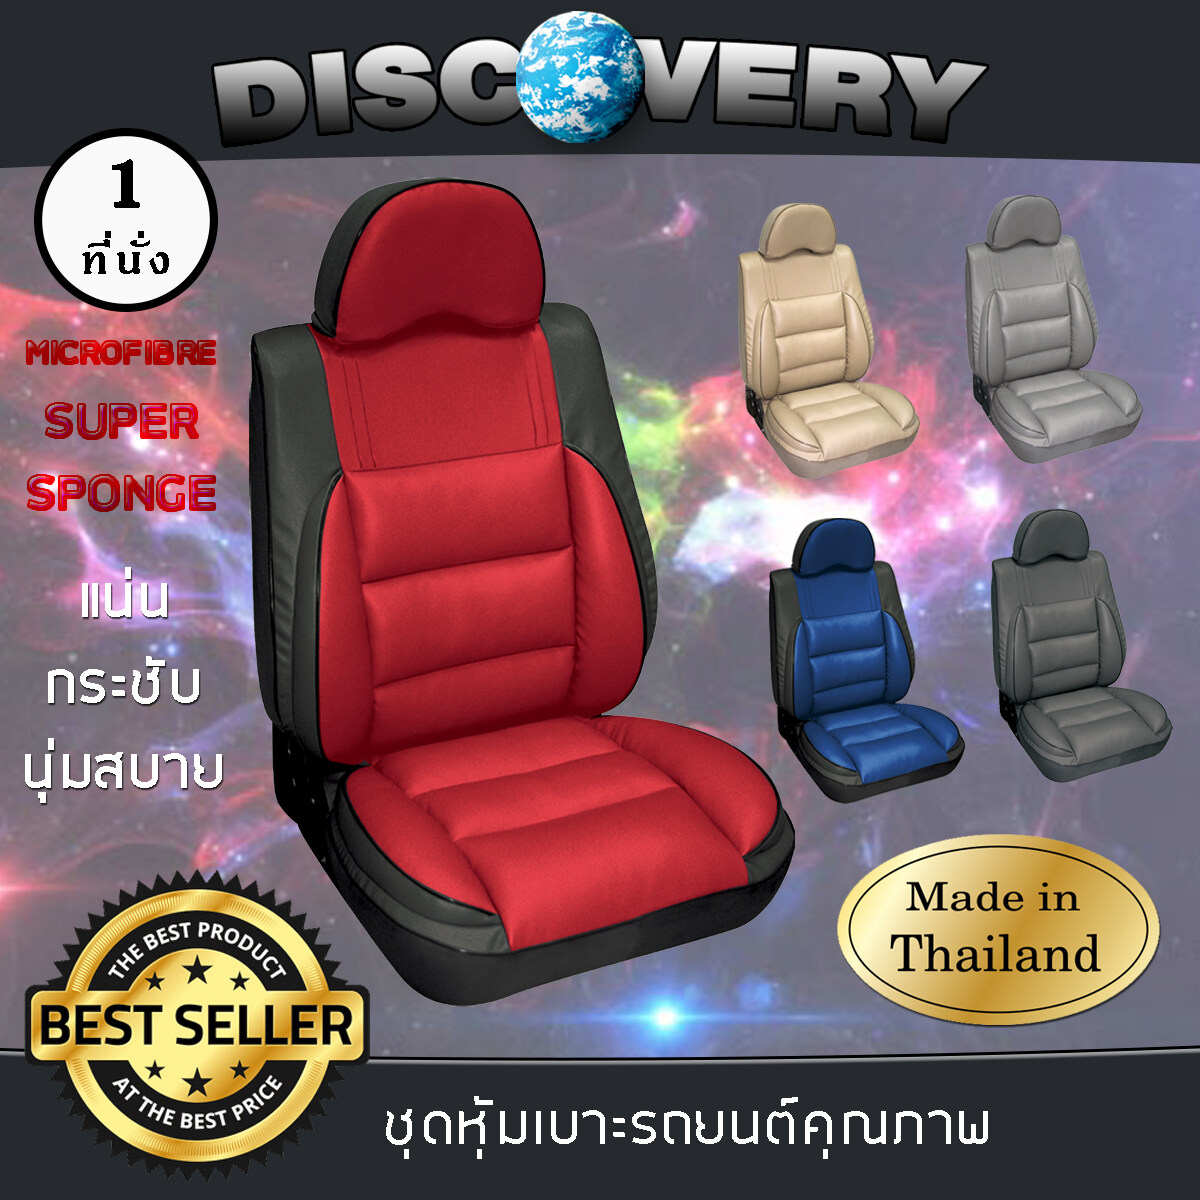 SPORT VIEW ชุดหุ้มเบาะรถยนต์ 1 ที่นั่ง DISCOVERY หุ้มเบาะสวมทับ ฟรีไซส์ เบาะหนัง PVC คุณภาพ ไมโครไฟเบอร์ Super Sponge นุ่มสบาย แข็งแรง  Car Seat Cover 1 ที่นั่ง